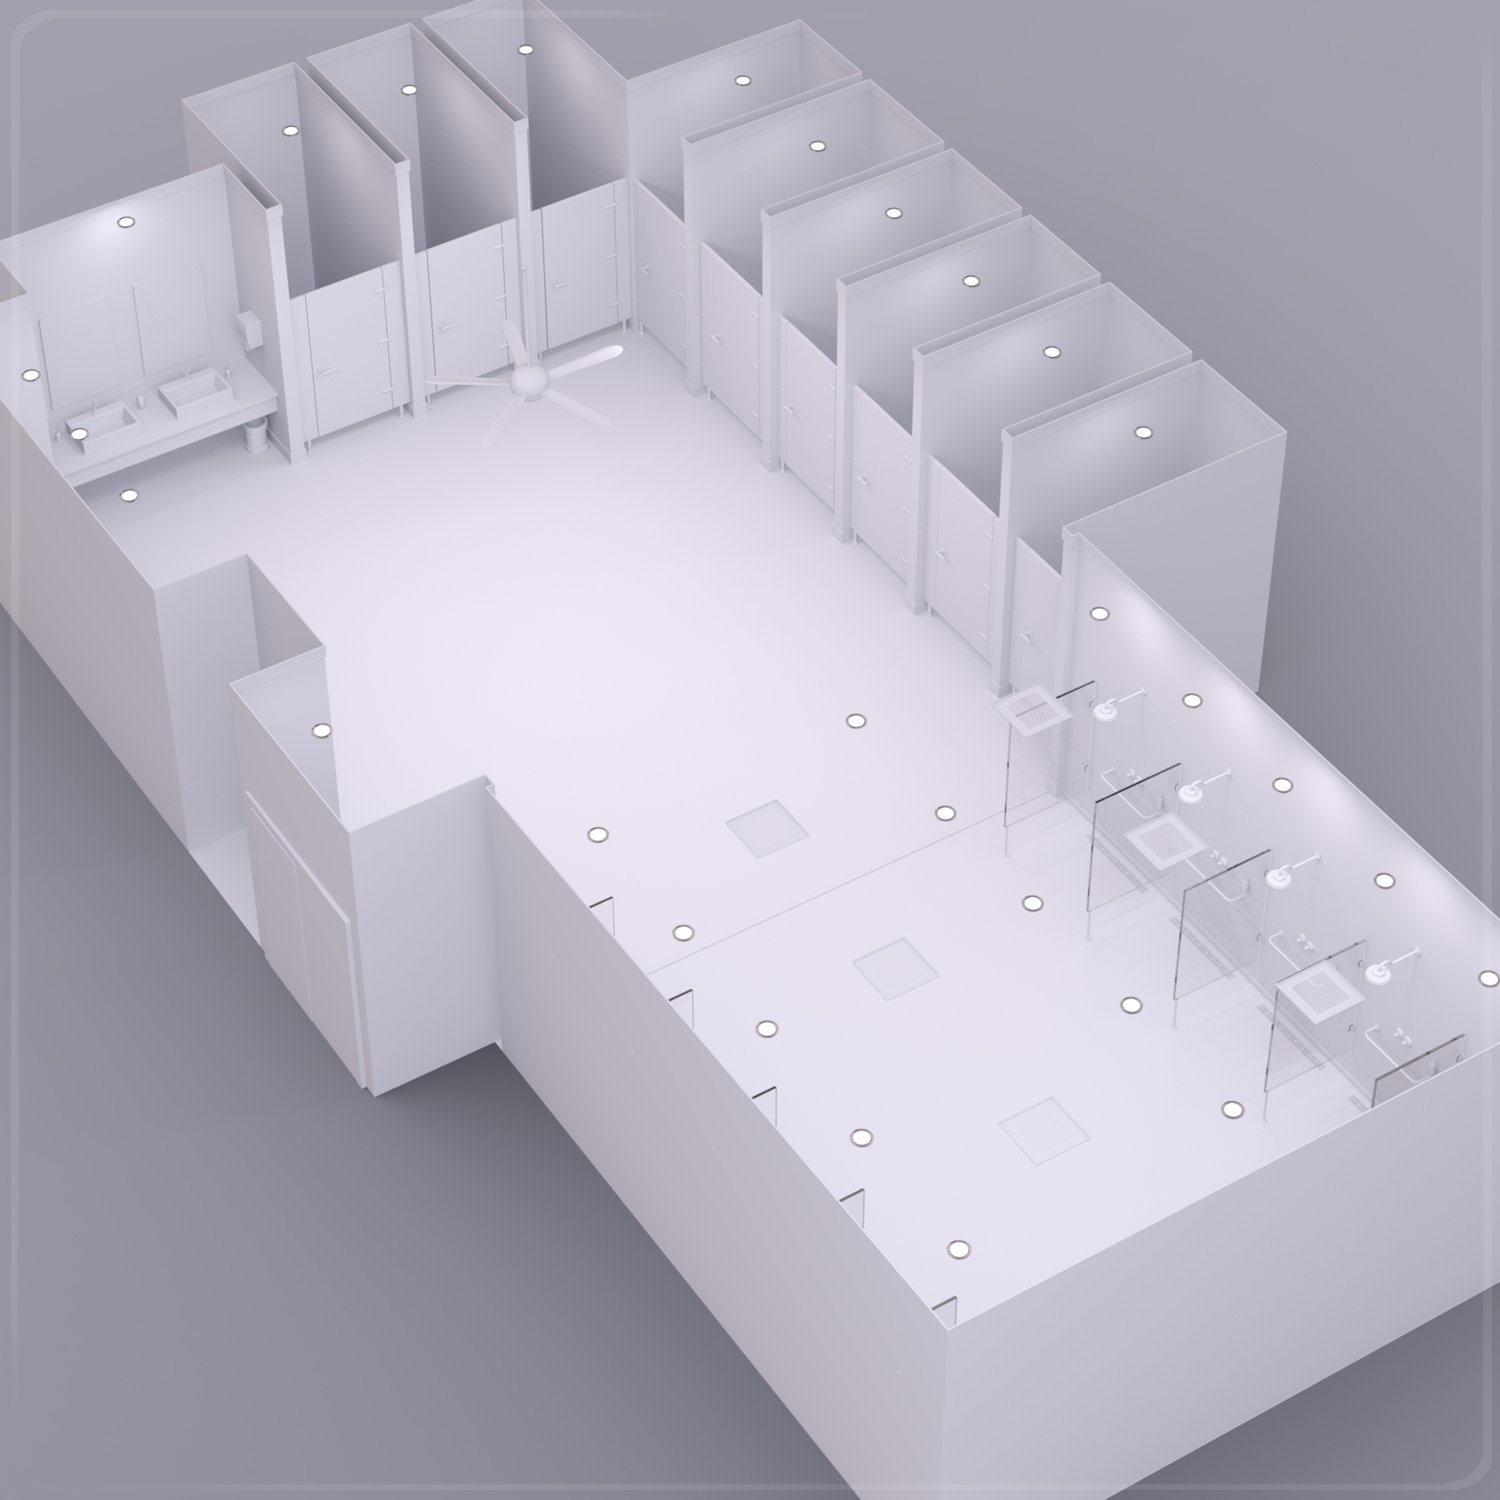 Z Shower and Lavatory Environment by: Zeddicuss, 3D Models by Daz 3D